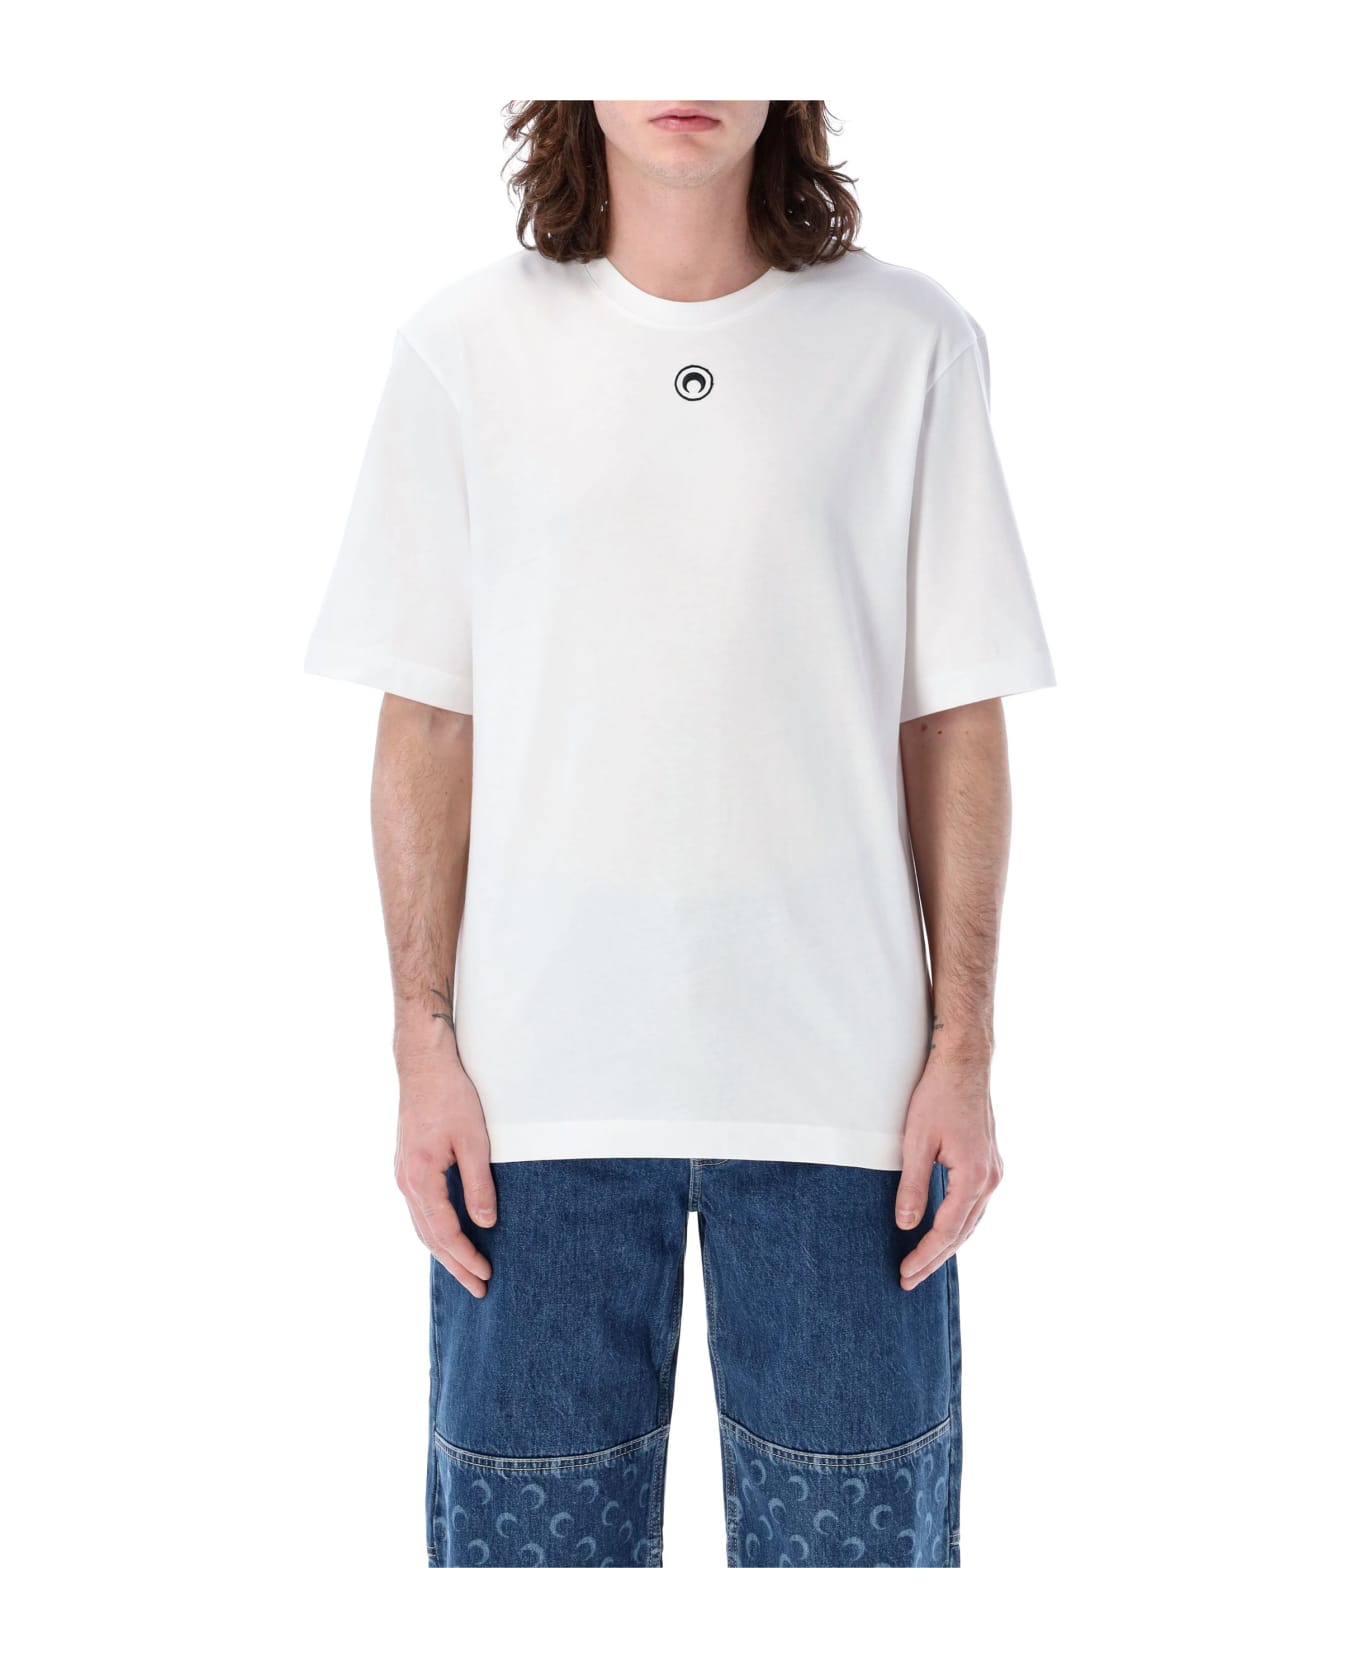 Marine Serre Organic Cotton Jersey Plain T-shirt - White